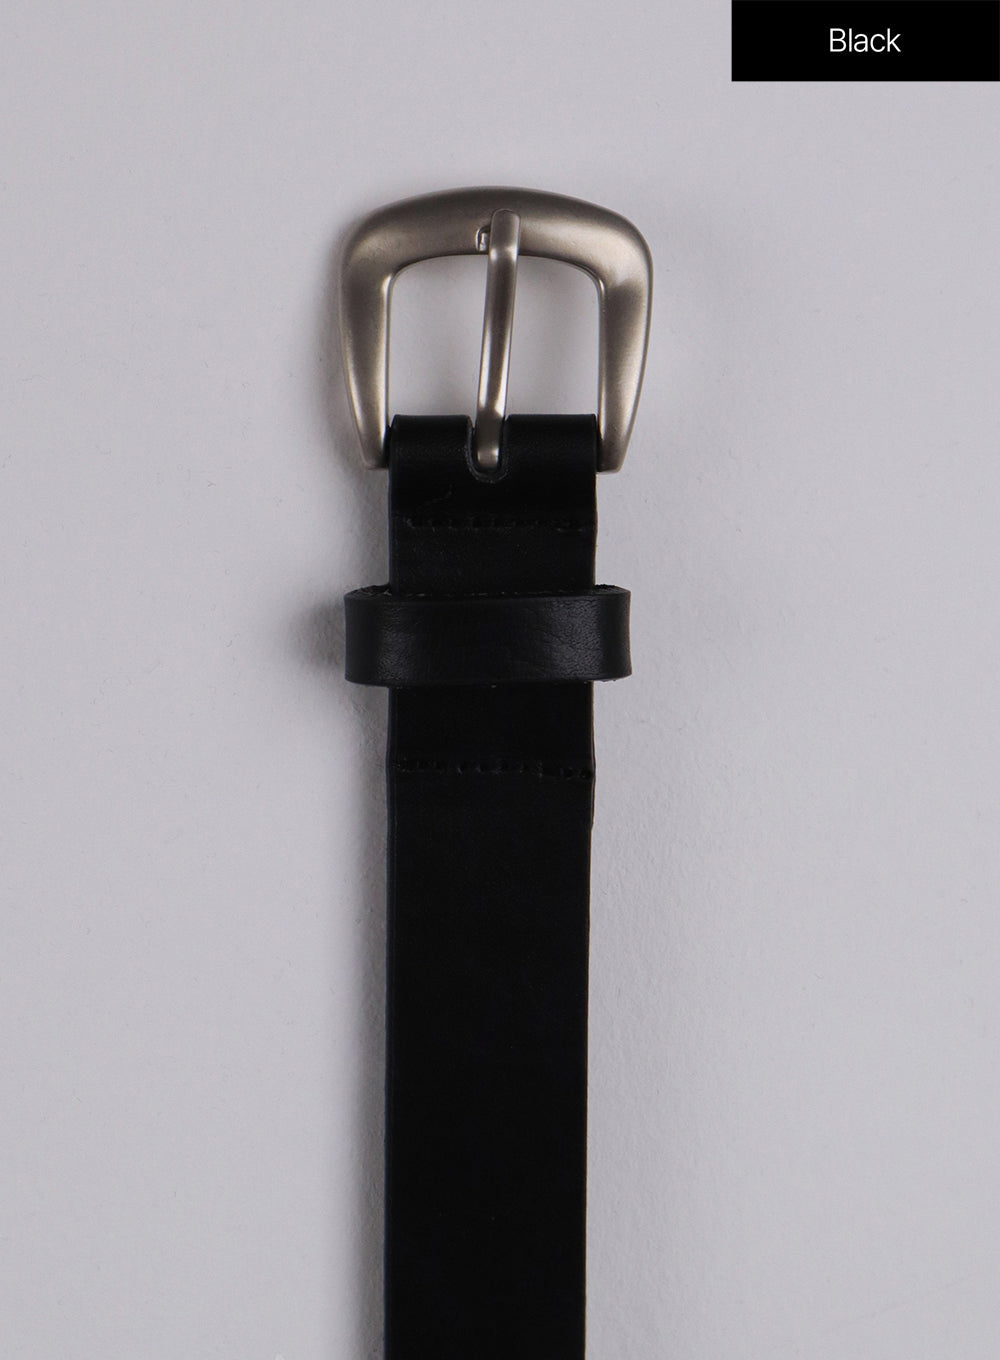 basic-faux-leather-belt-cj422